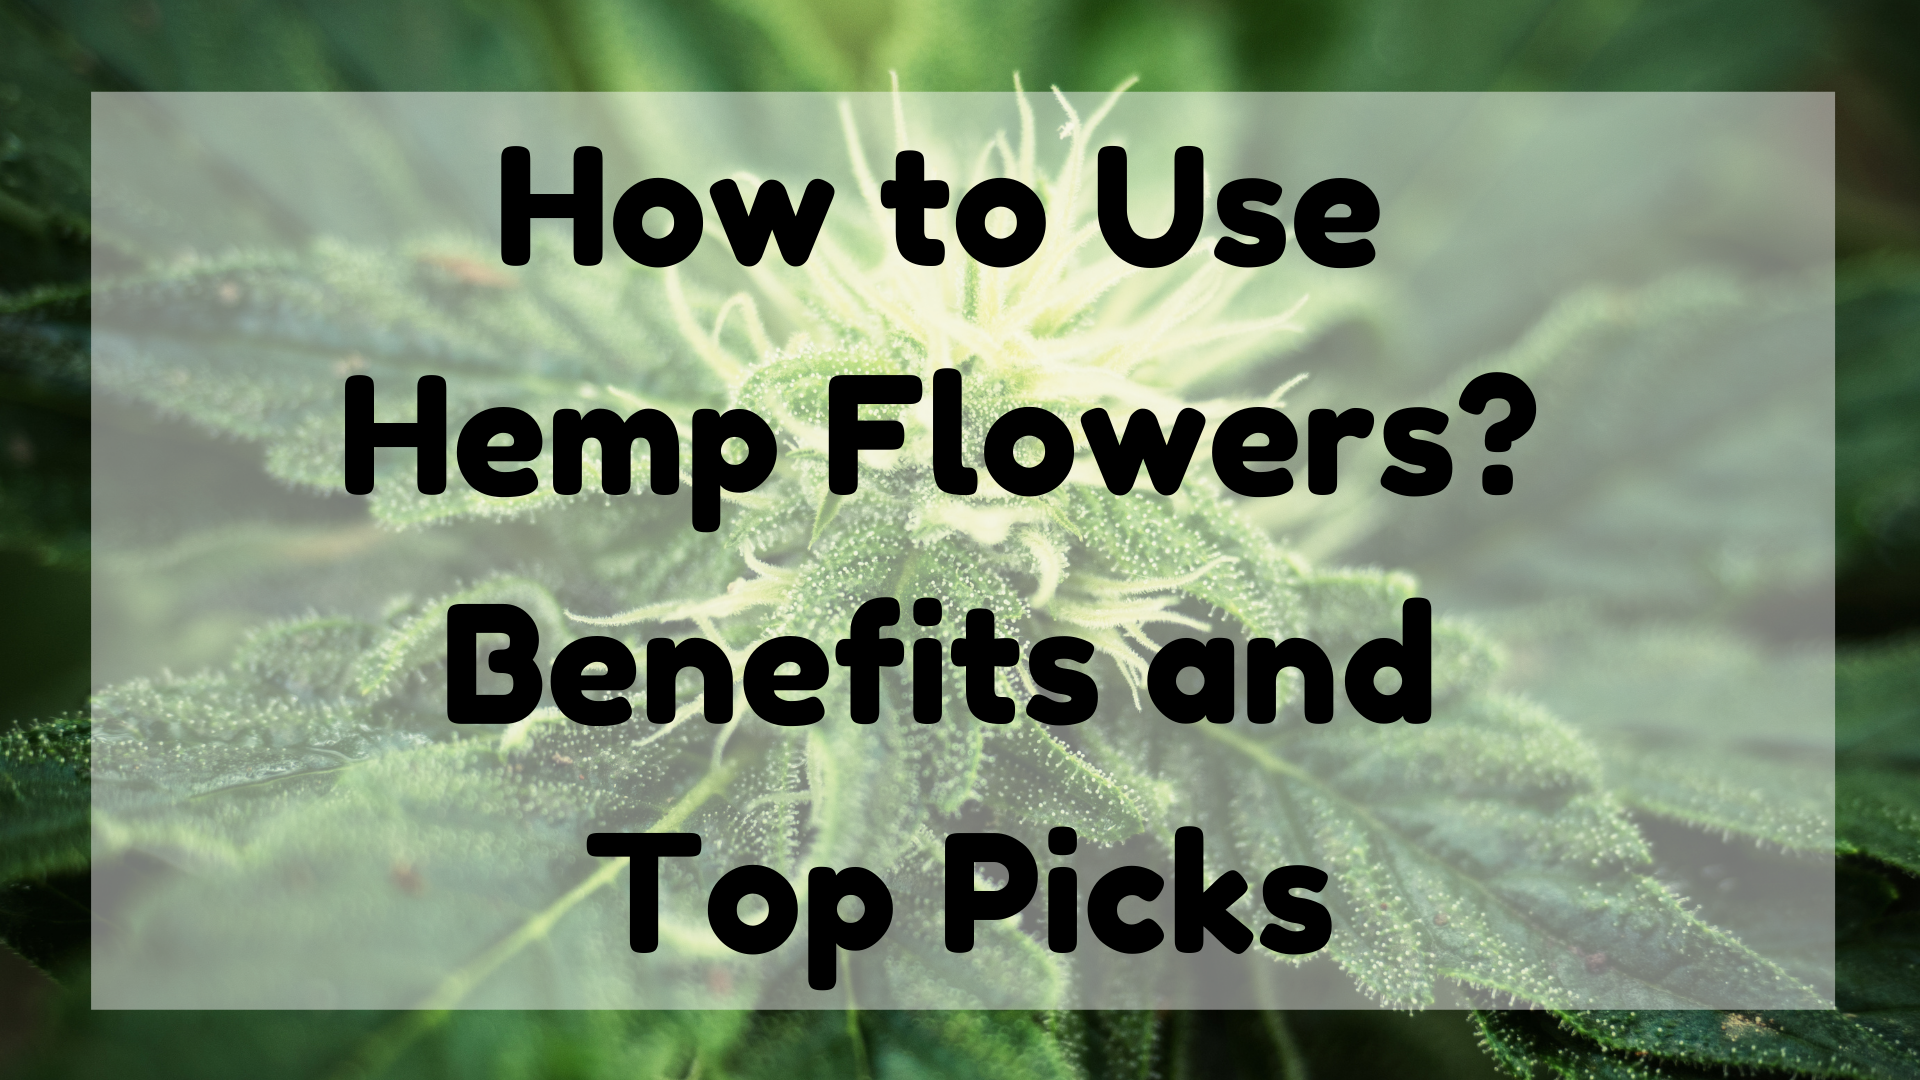 How to Use Hemp Flowers